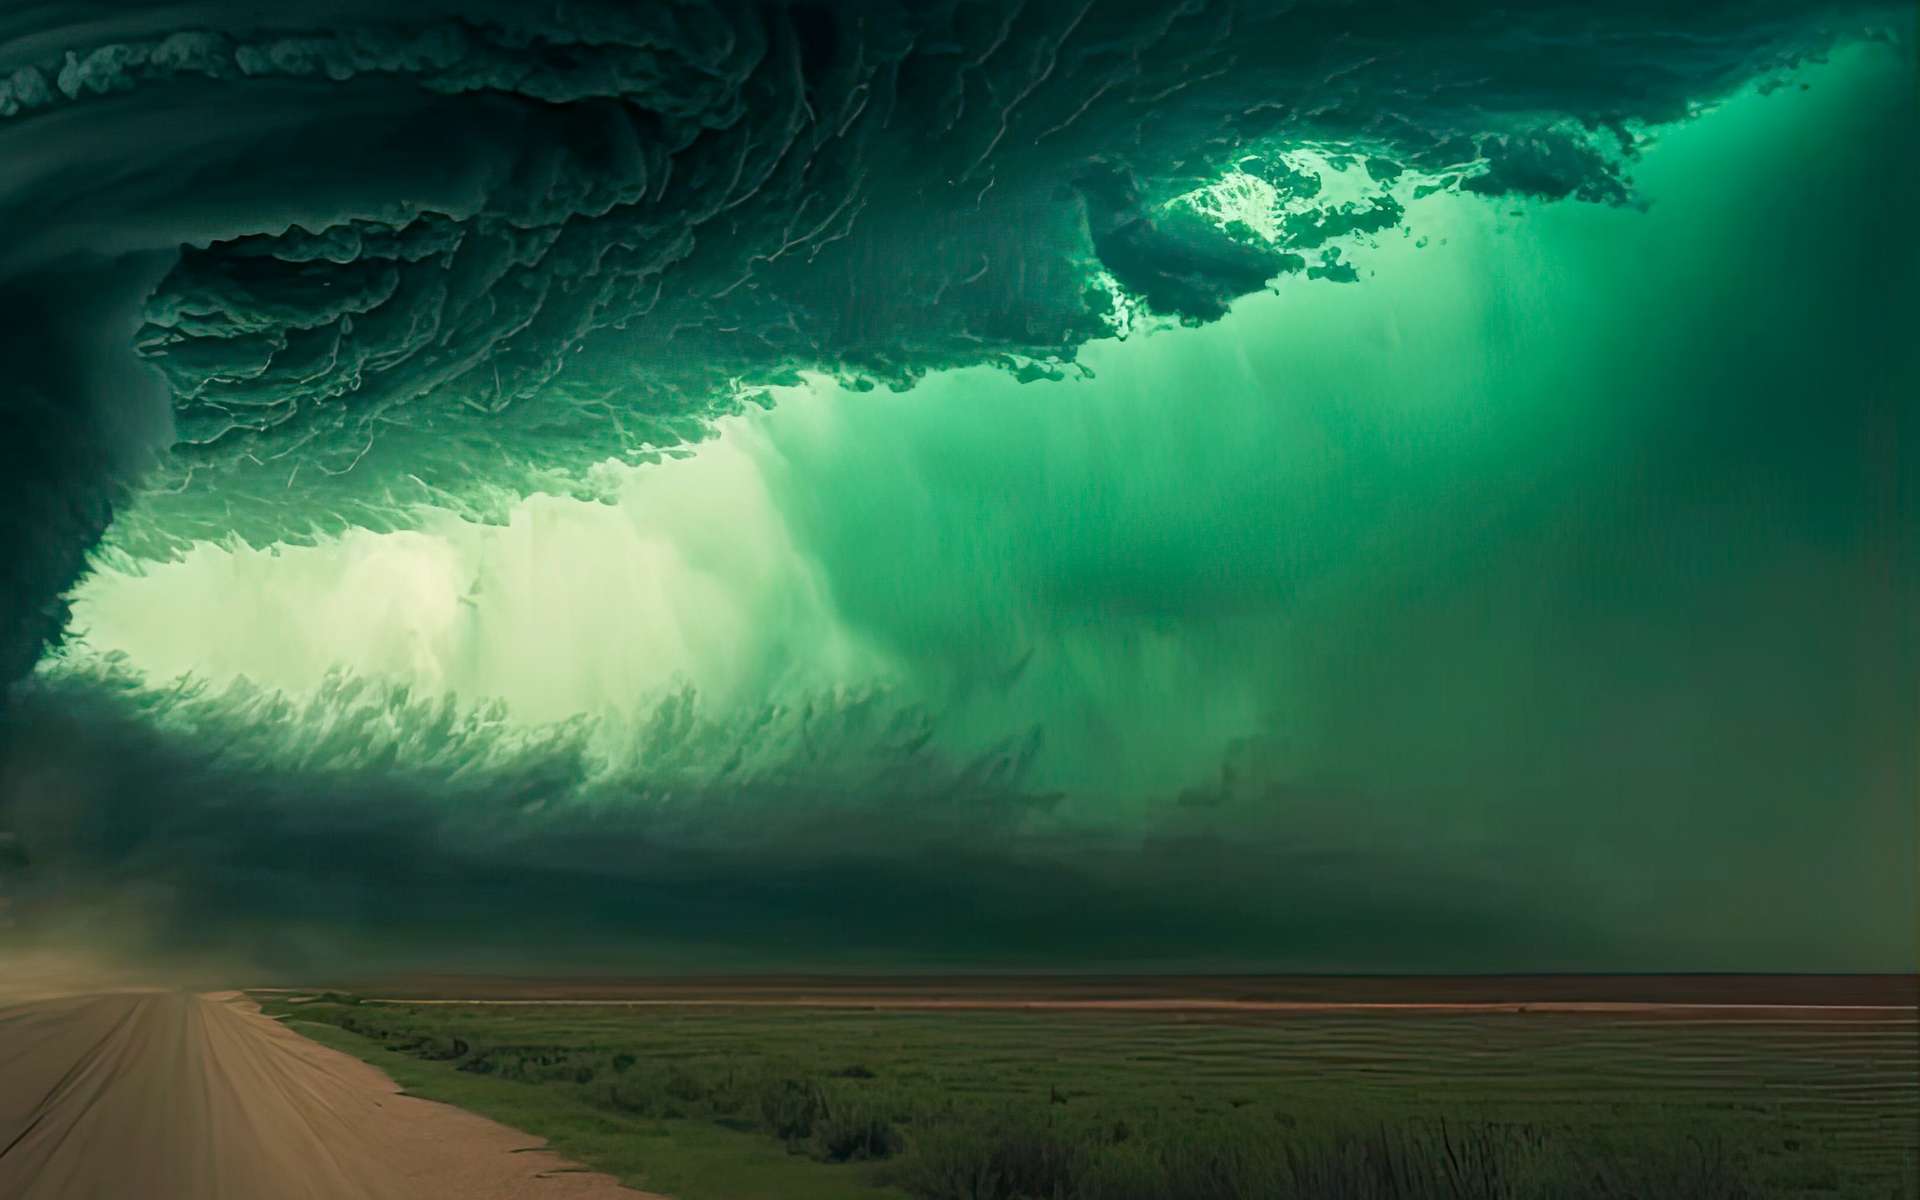 Un extraordinaire orage vert émeraude au Texas